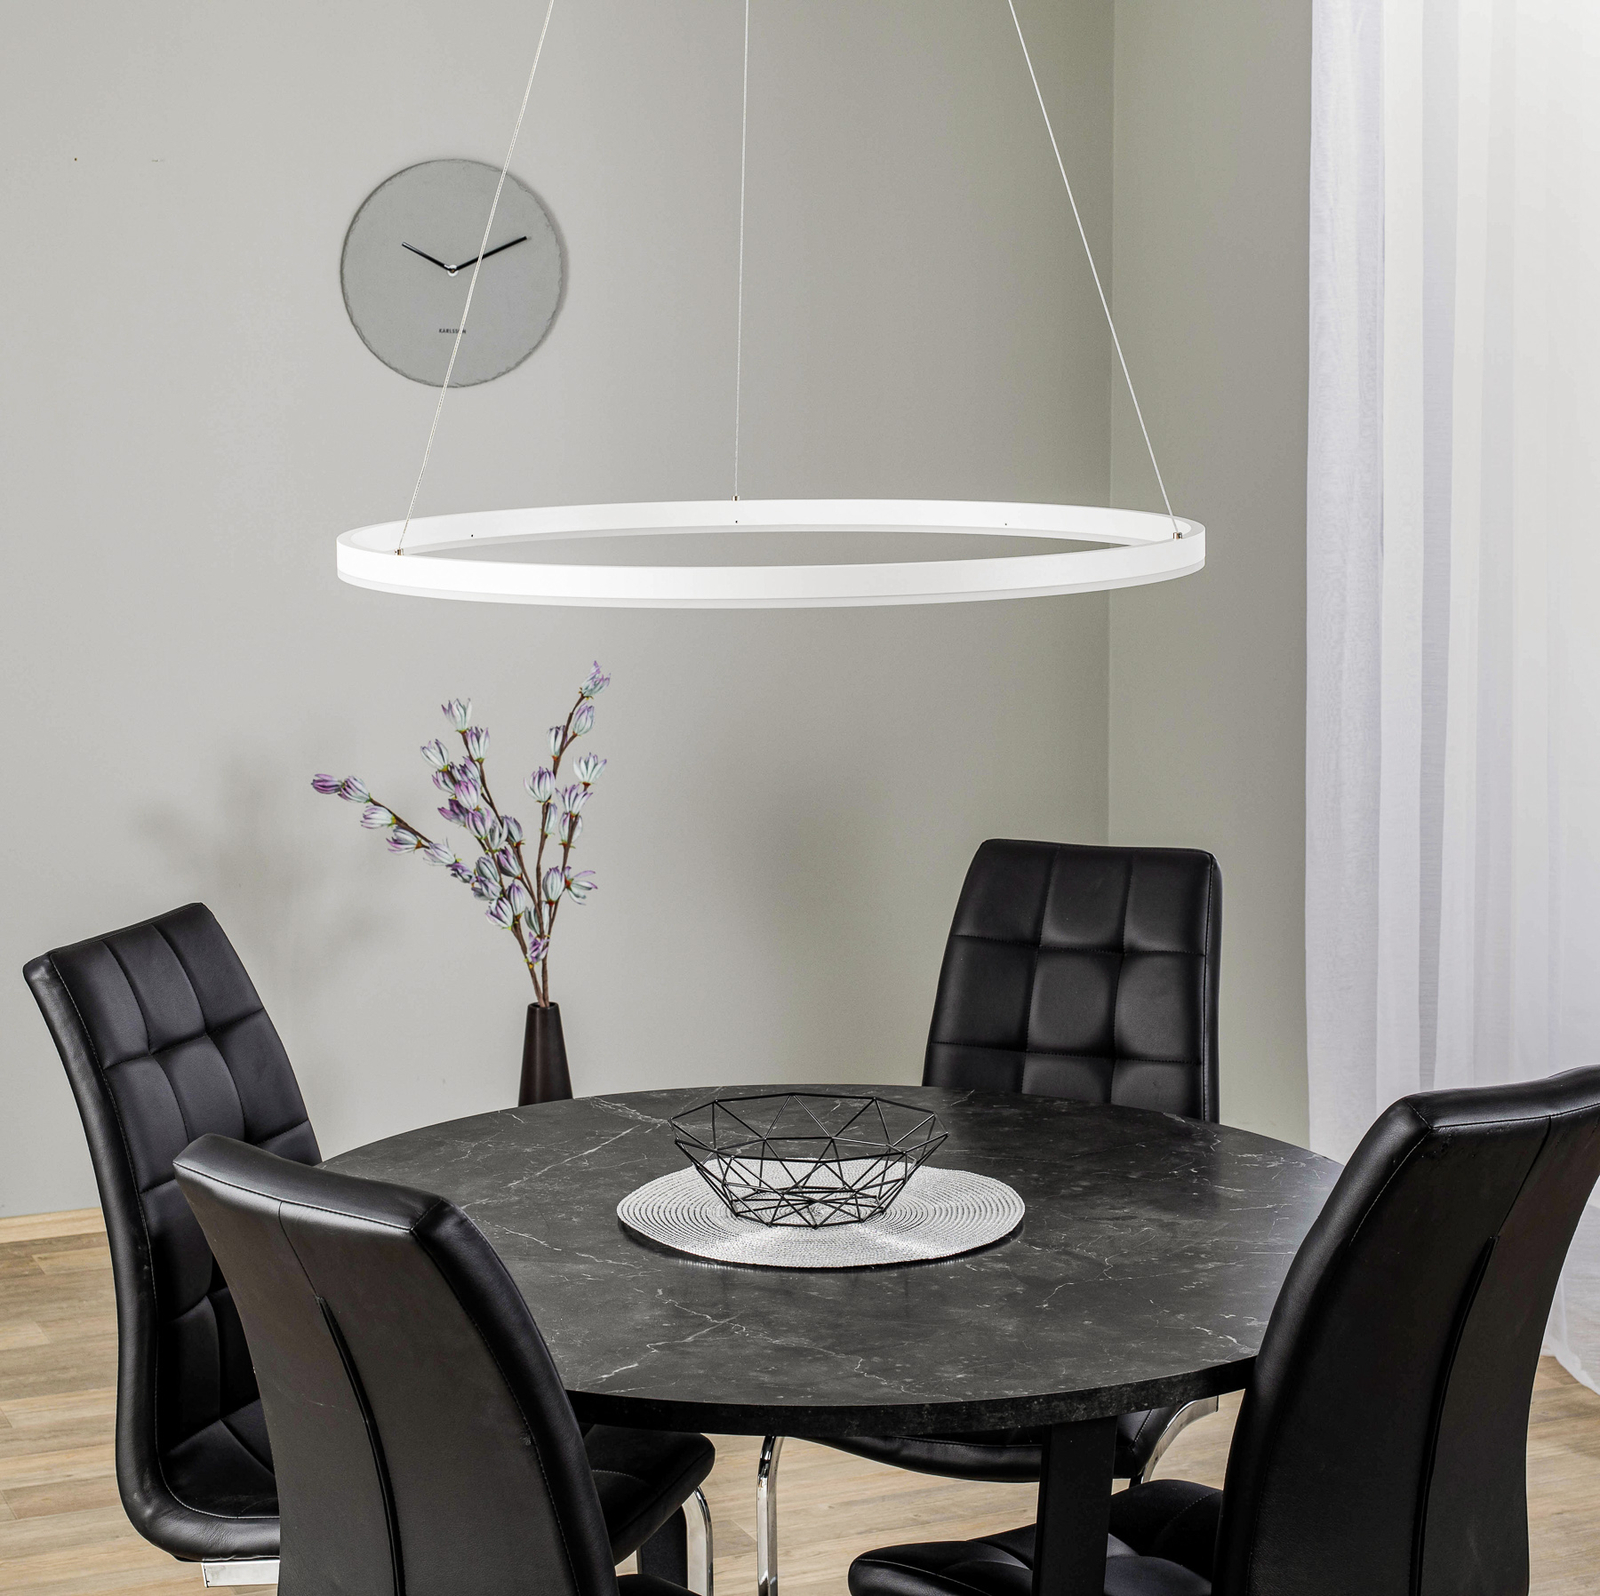 Závesné svietidlo Arcchio Albiona LED, biele, 80 cm